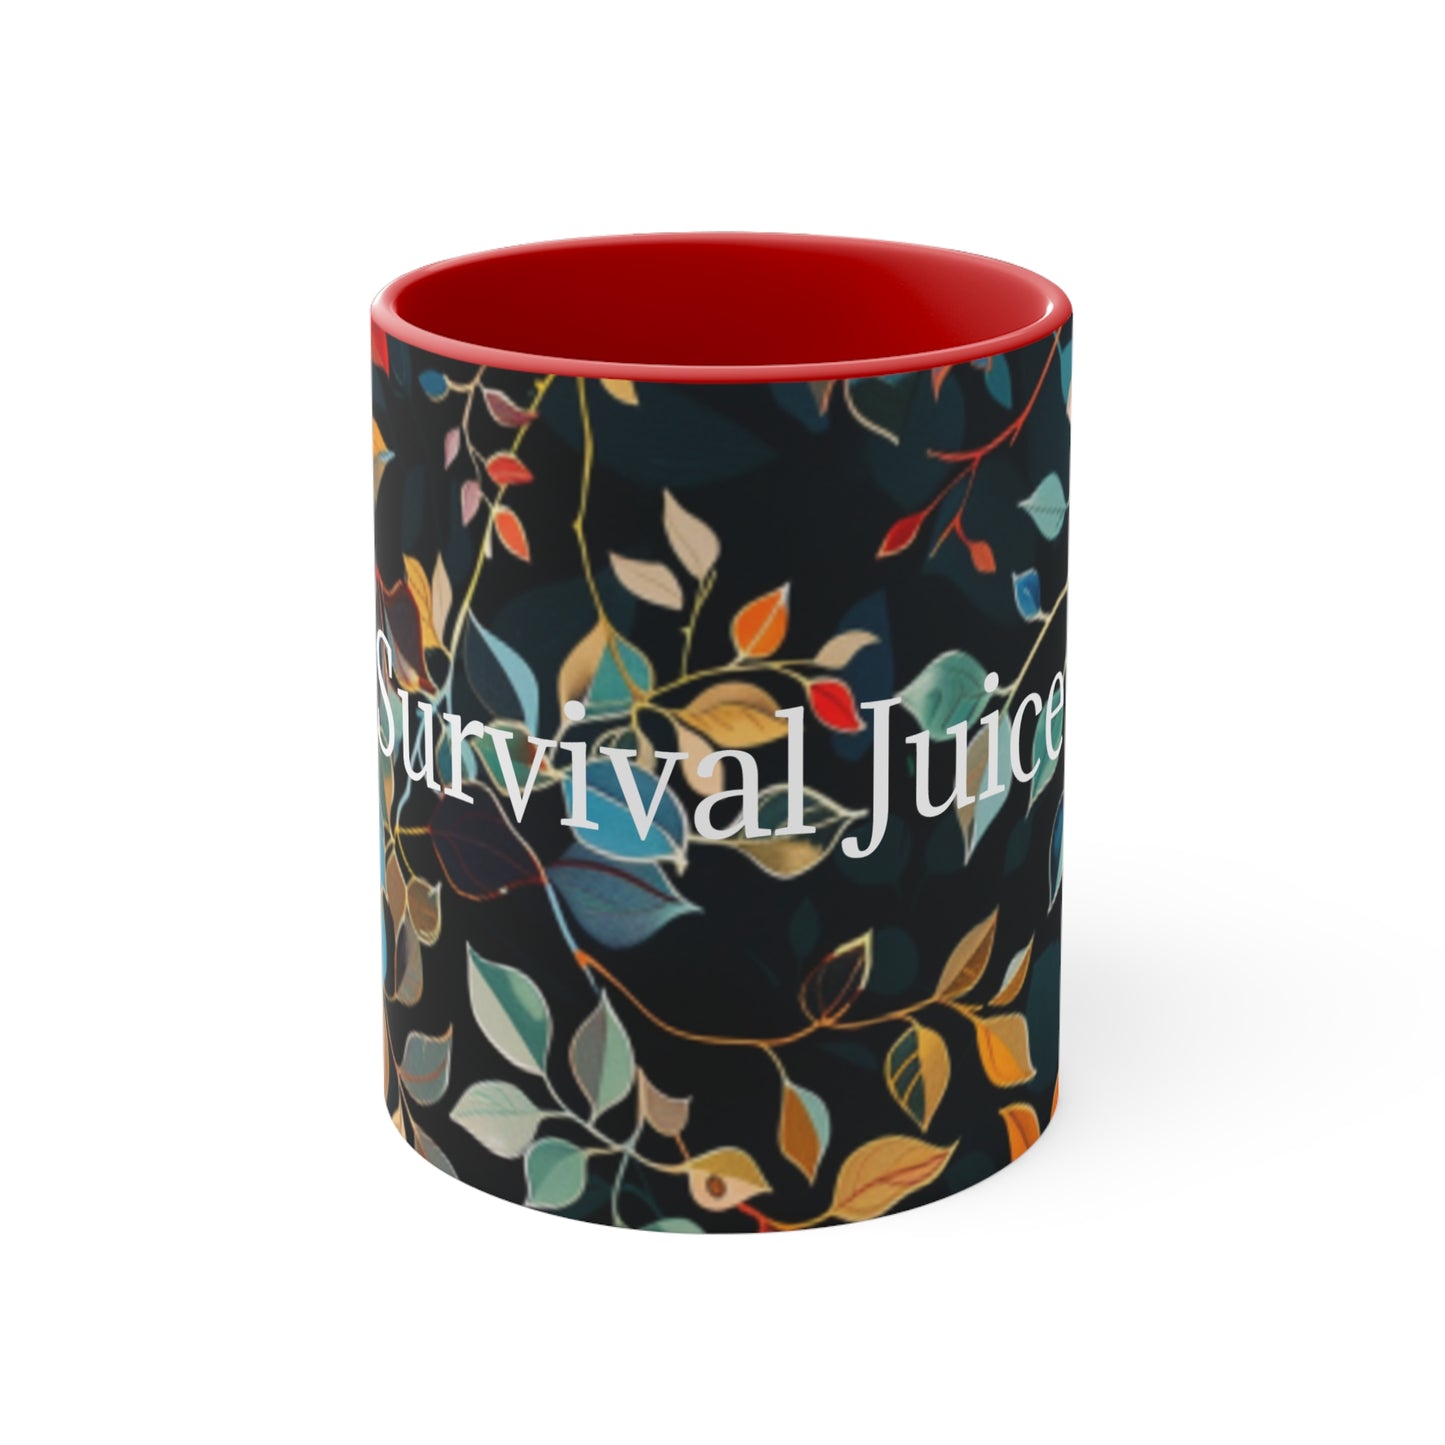 Survival Juice Accent Coffee Mug, 11oz